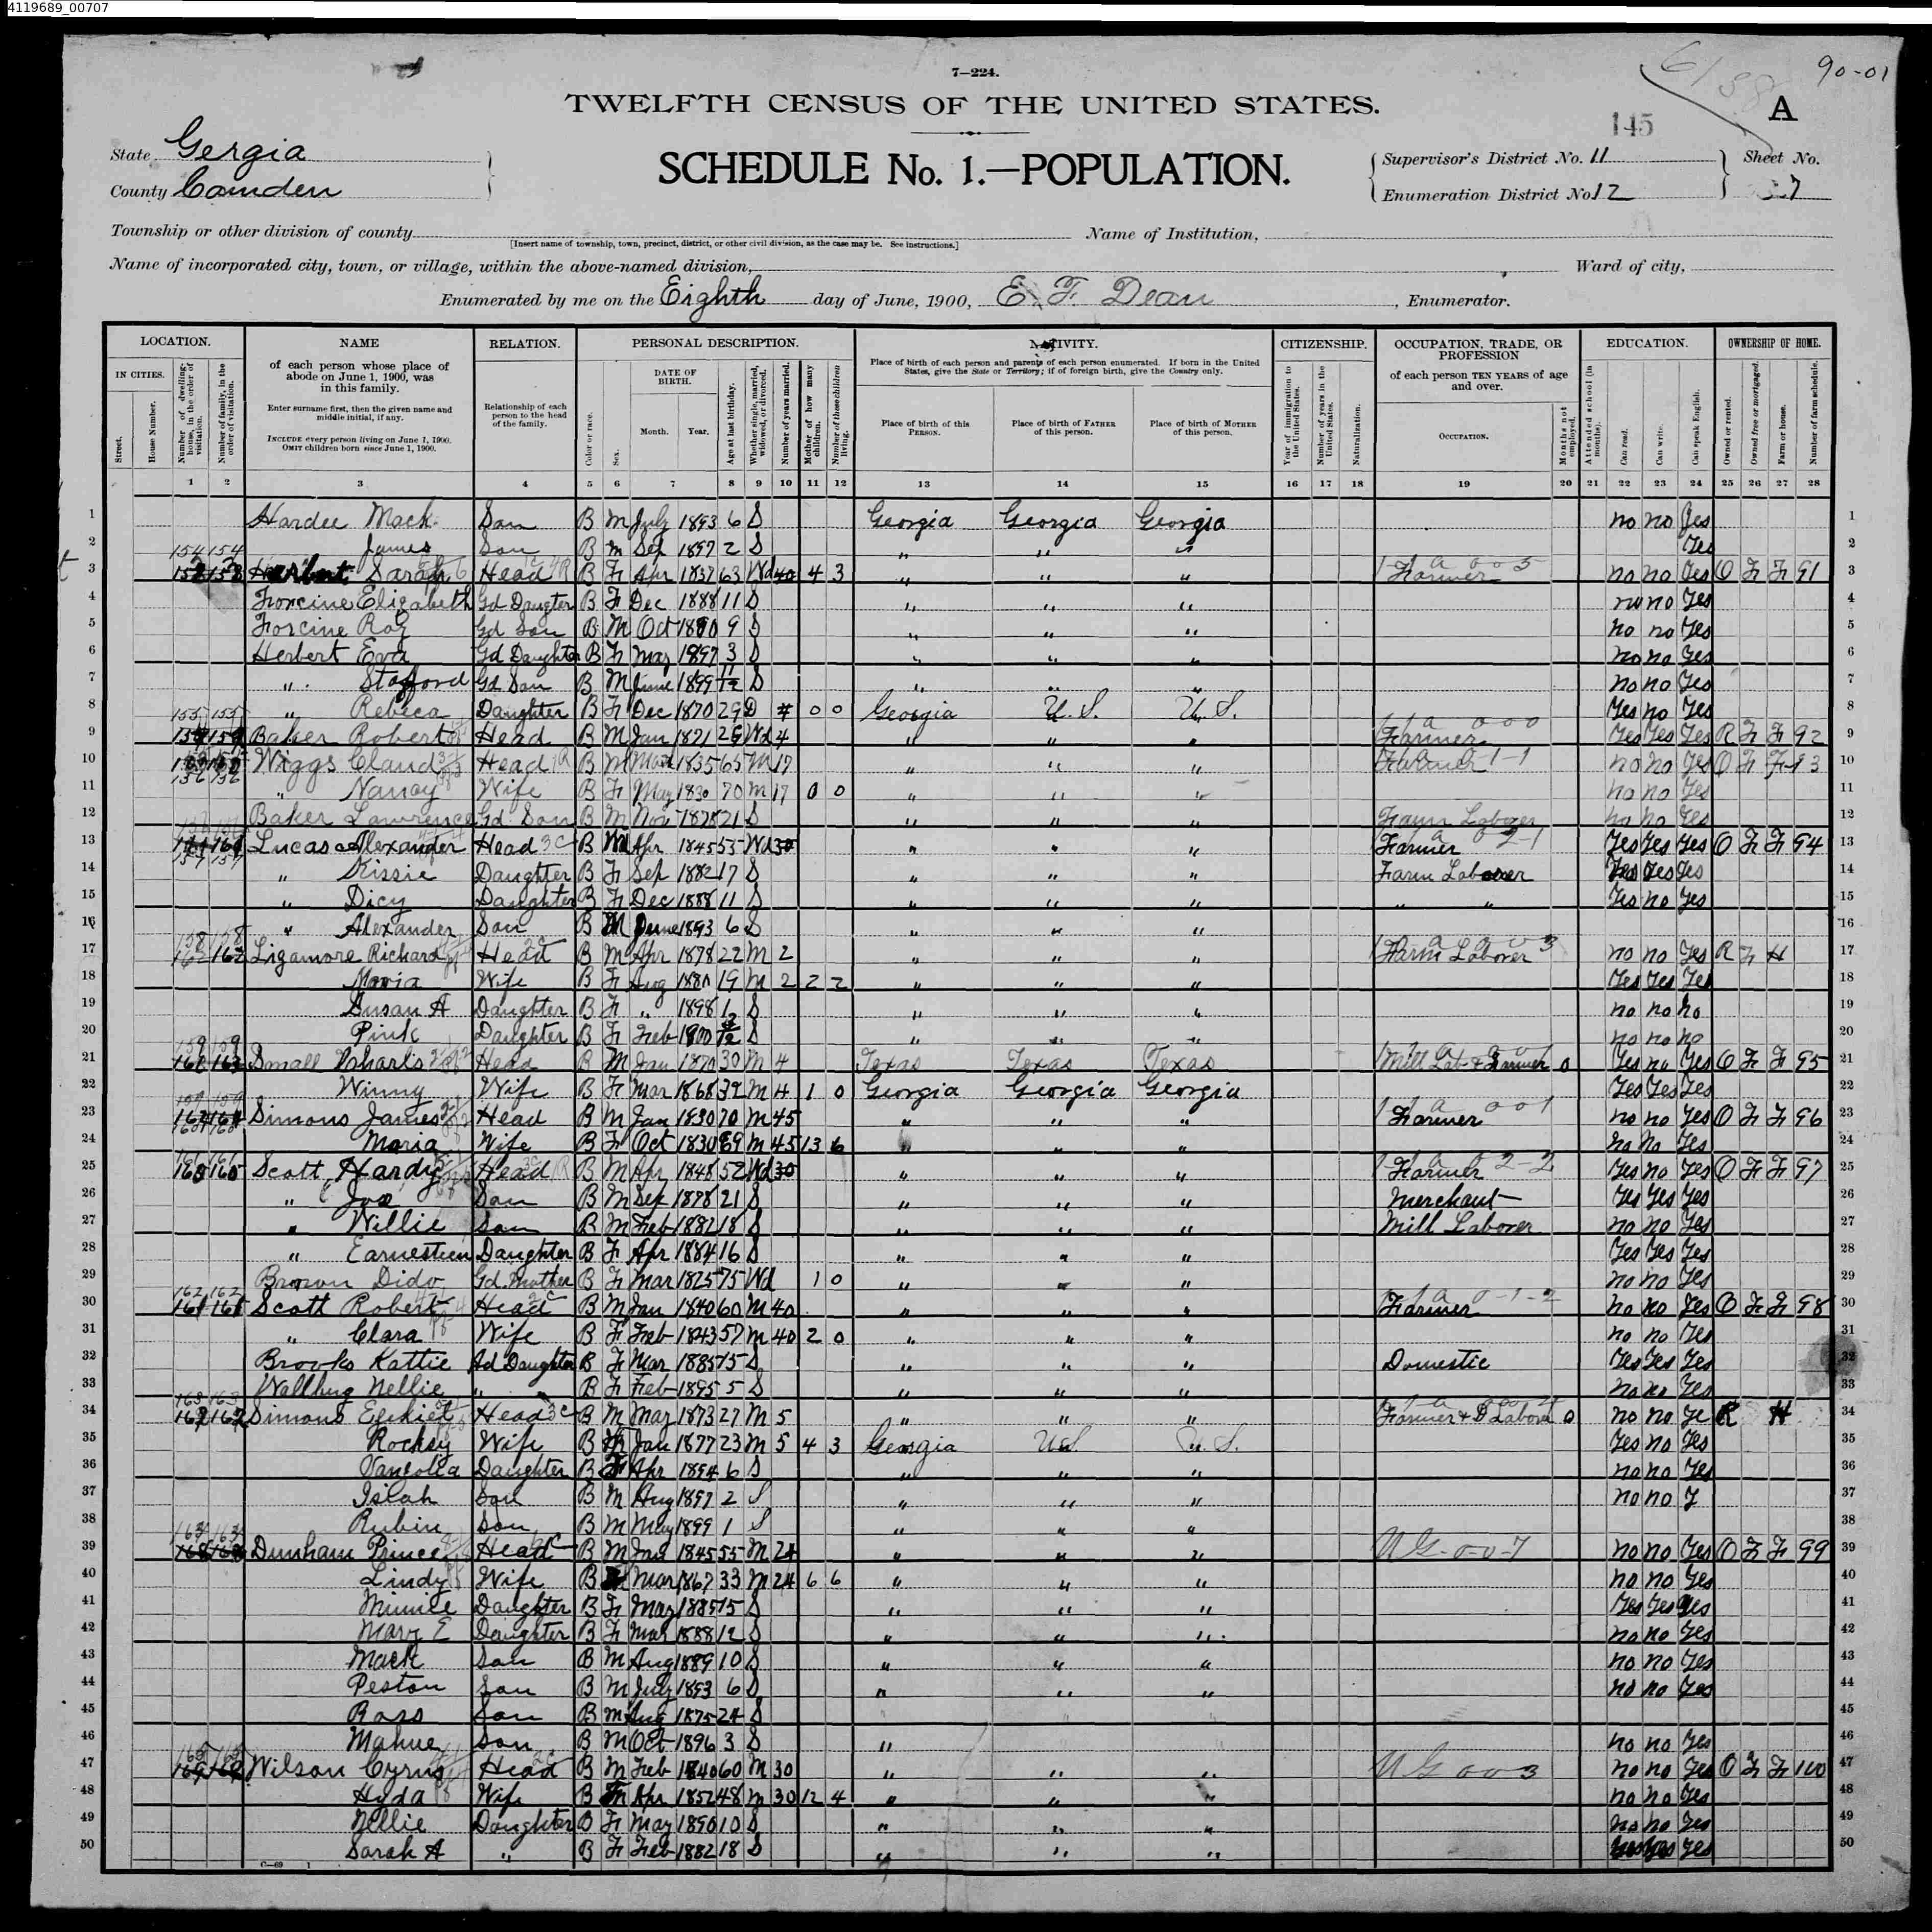 1900 US Census, Alexander Lucas, line 16